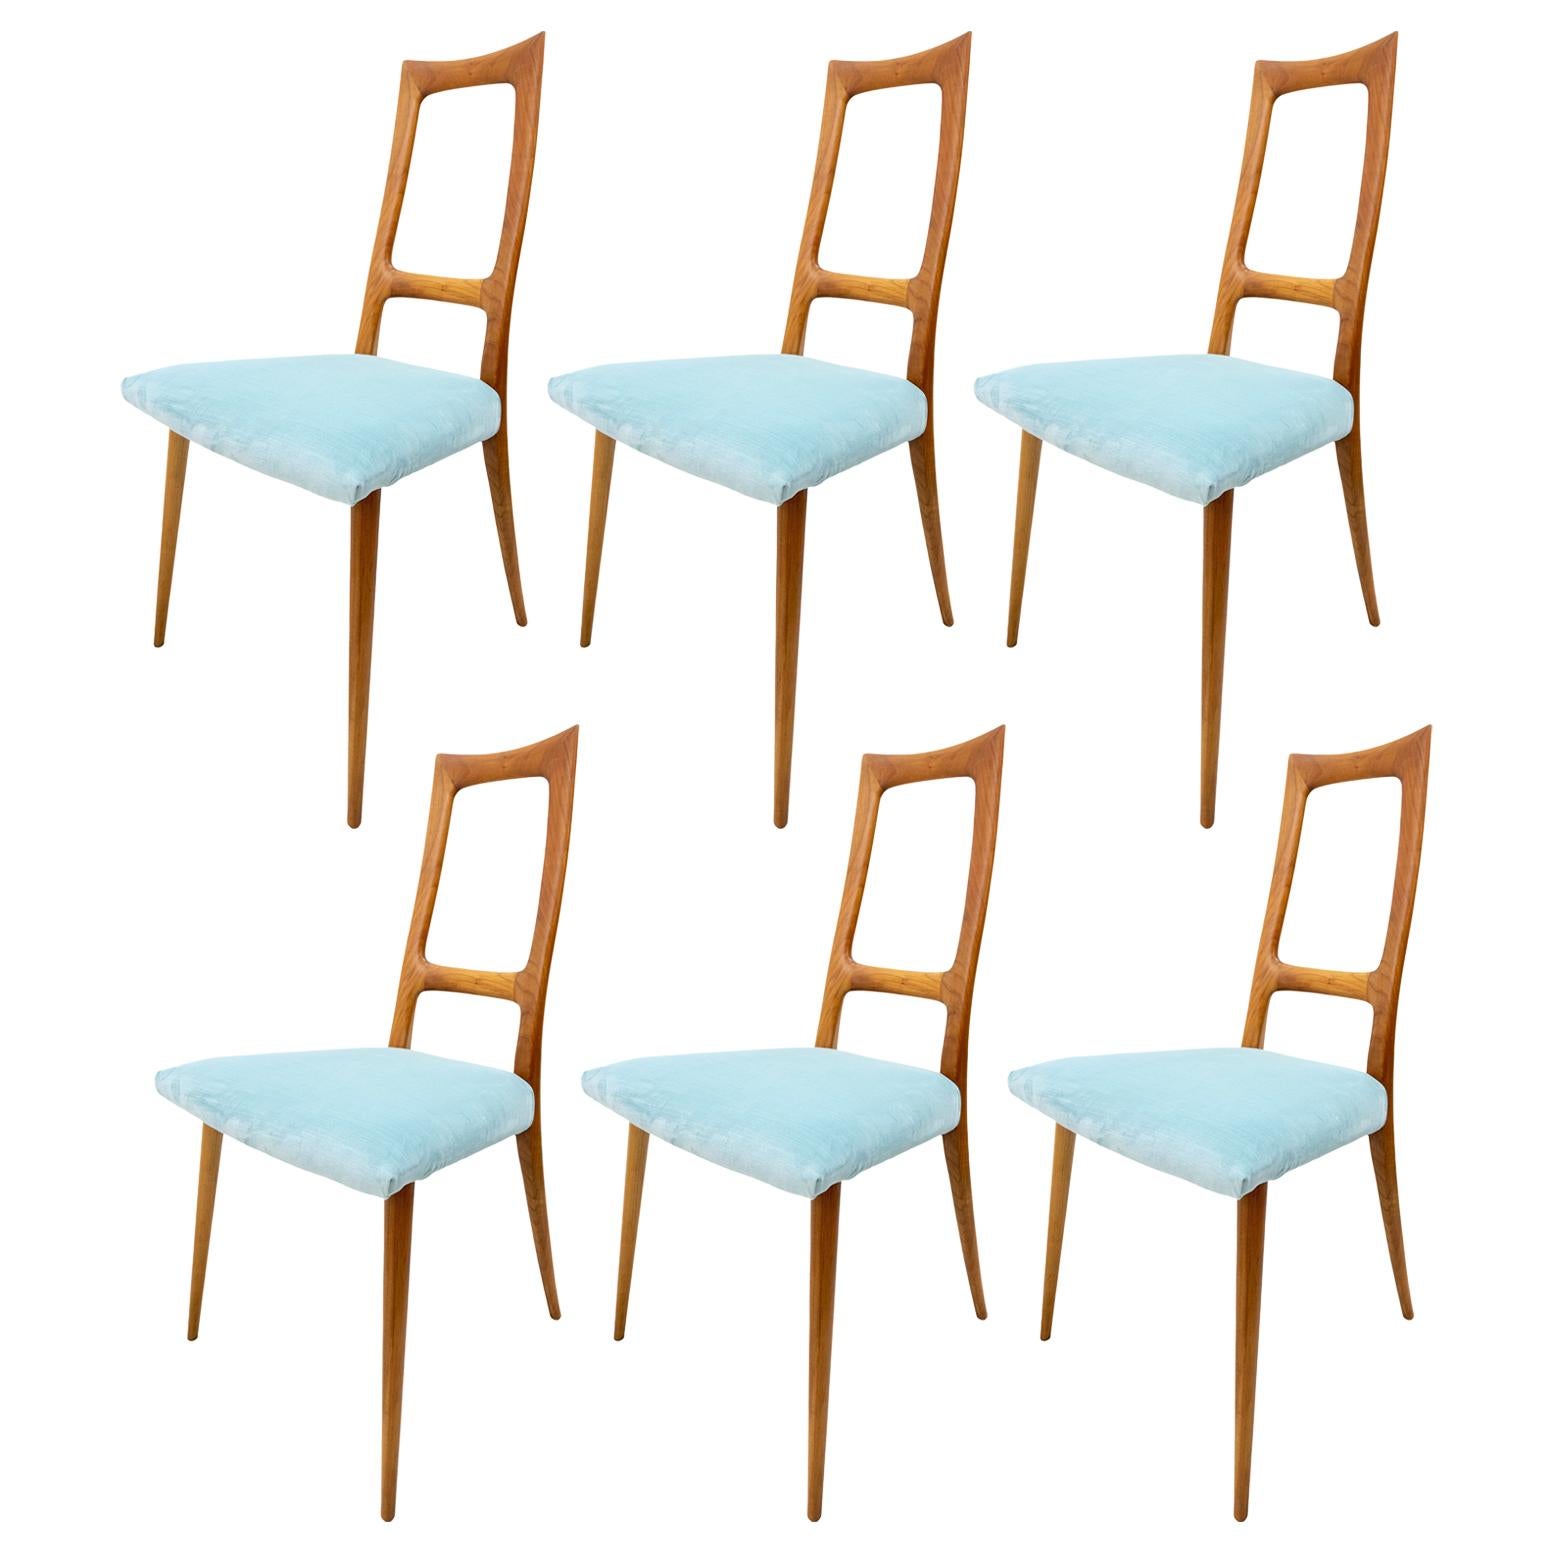 6 Italian Dining Chairs, Italy, 1950s